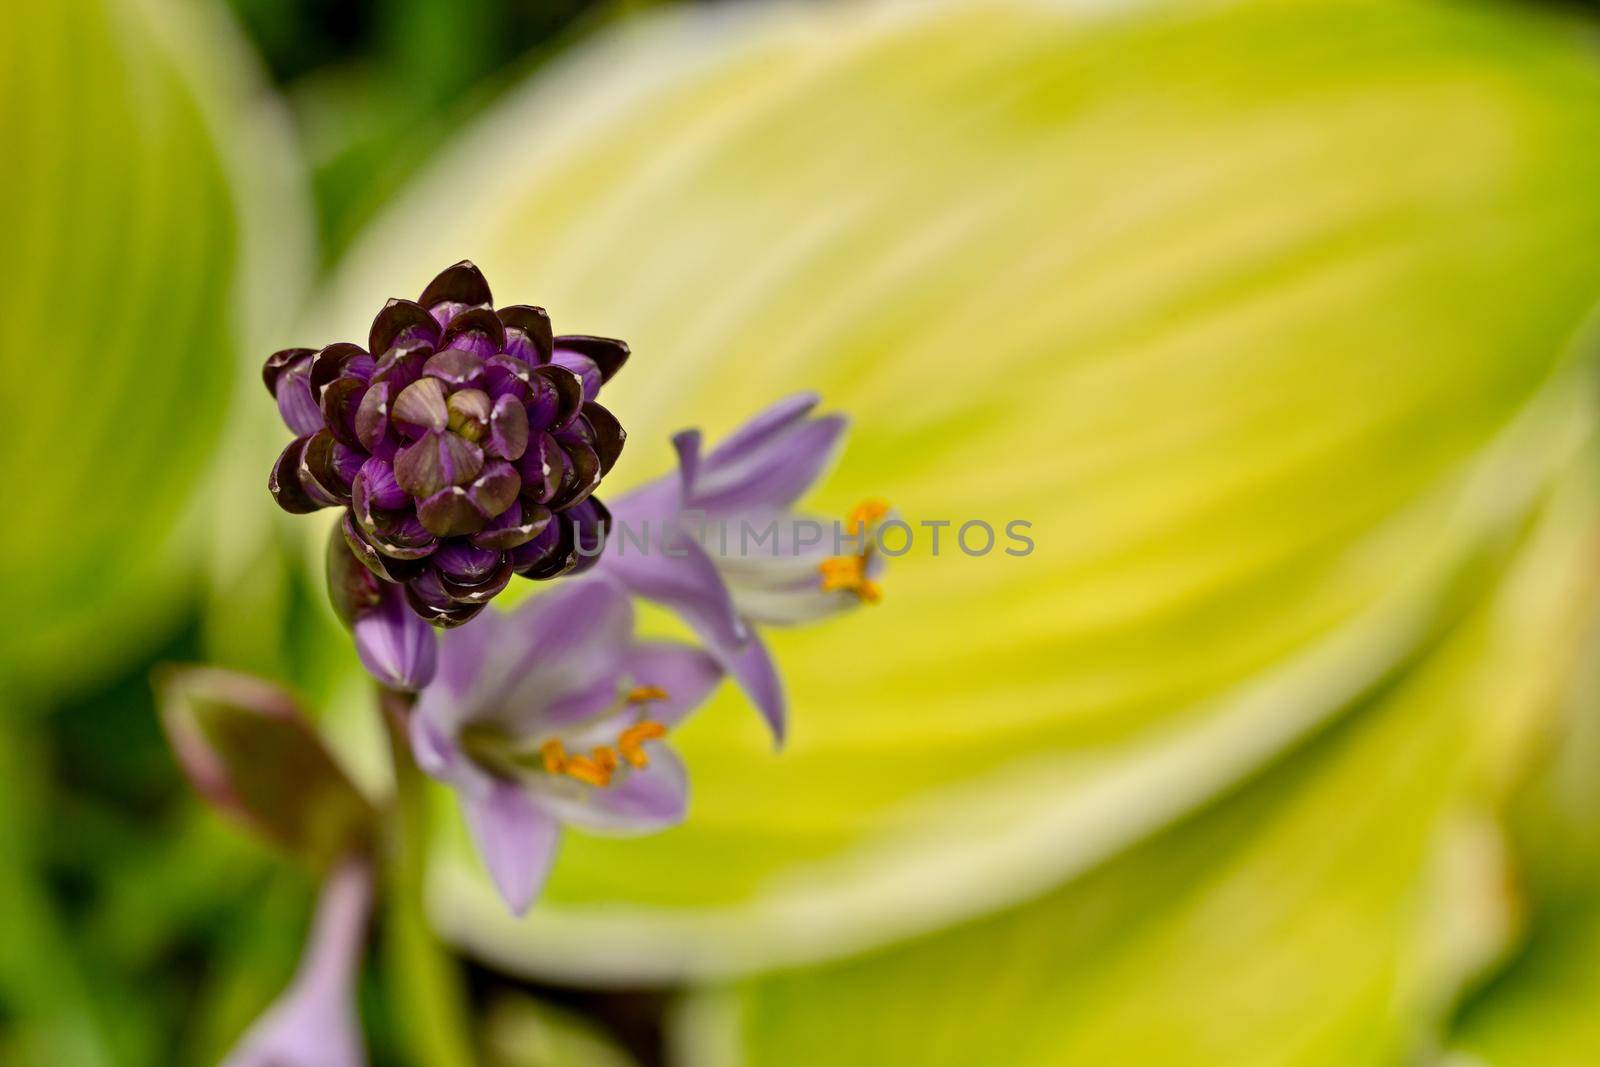 Garden purple hosta flower with yellow leaf by clusterx